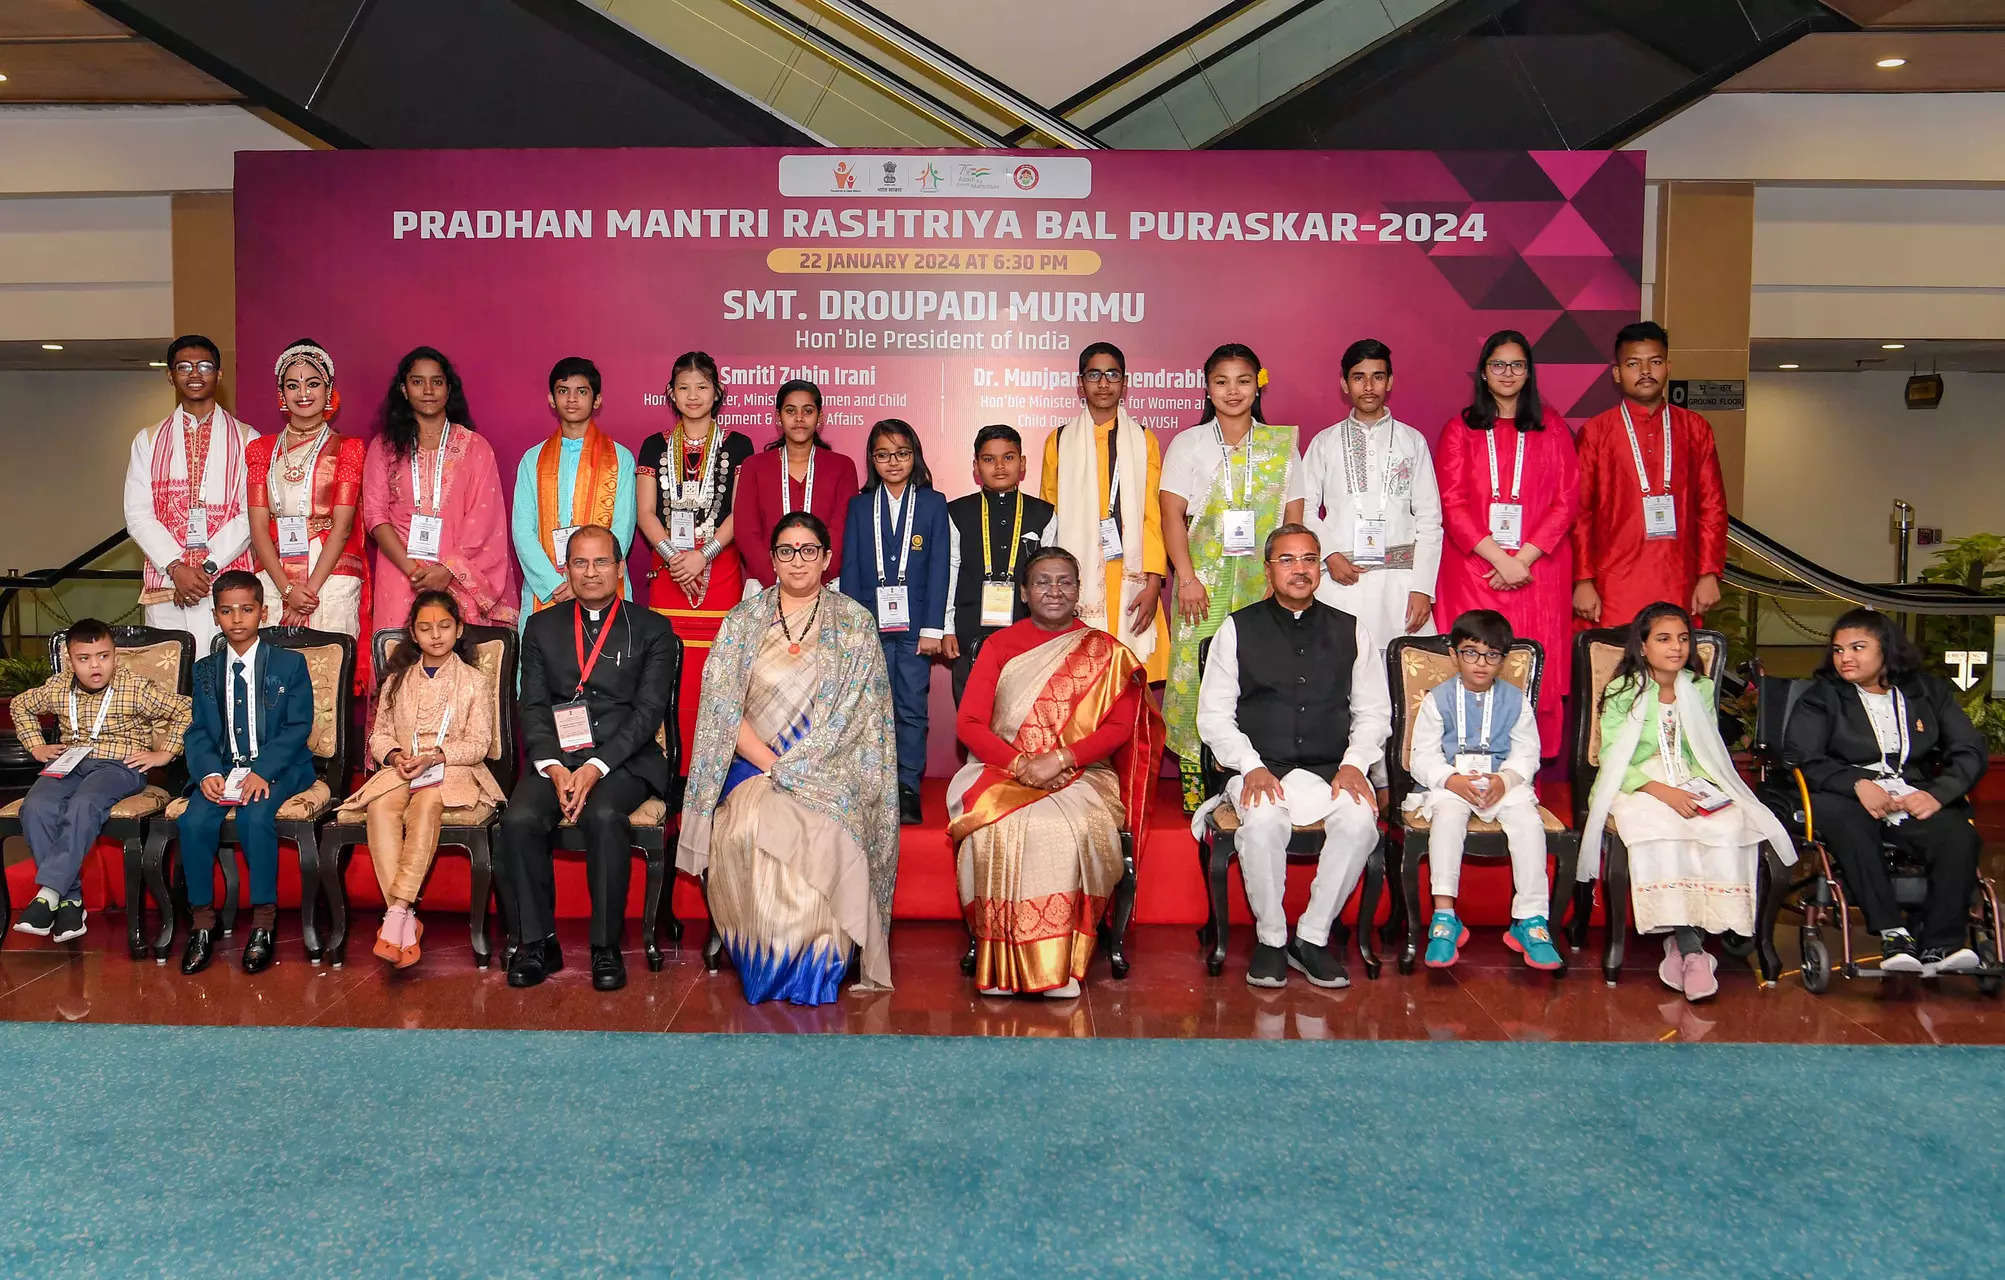 Mountaineer, AI scientist, 'Google boy' among 19 children awarded with PM Bal Puraskar 